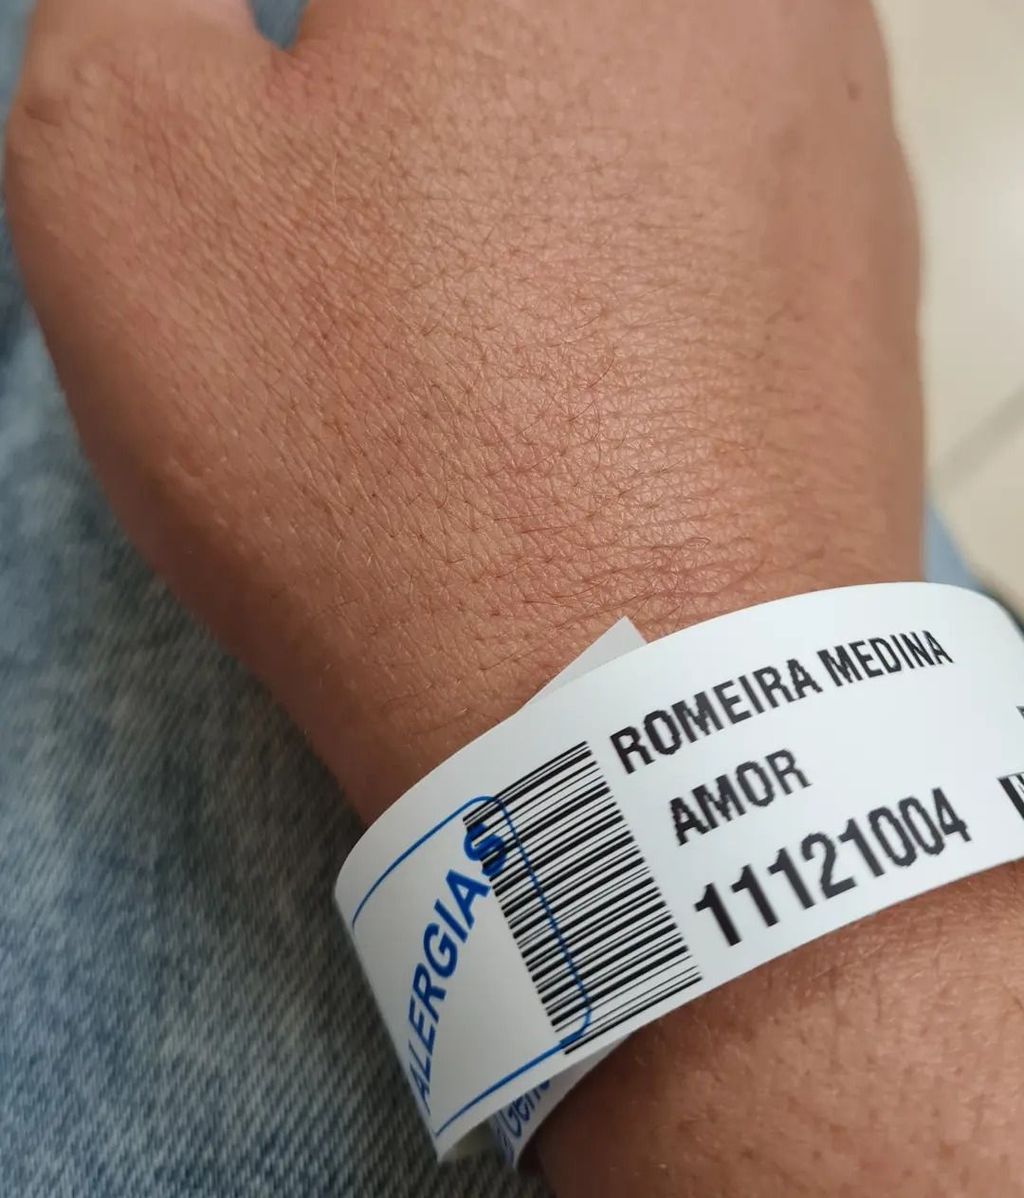 Amor Romeira preocupa desde el hospital